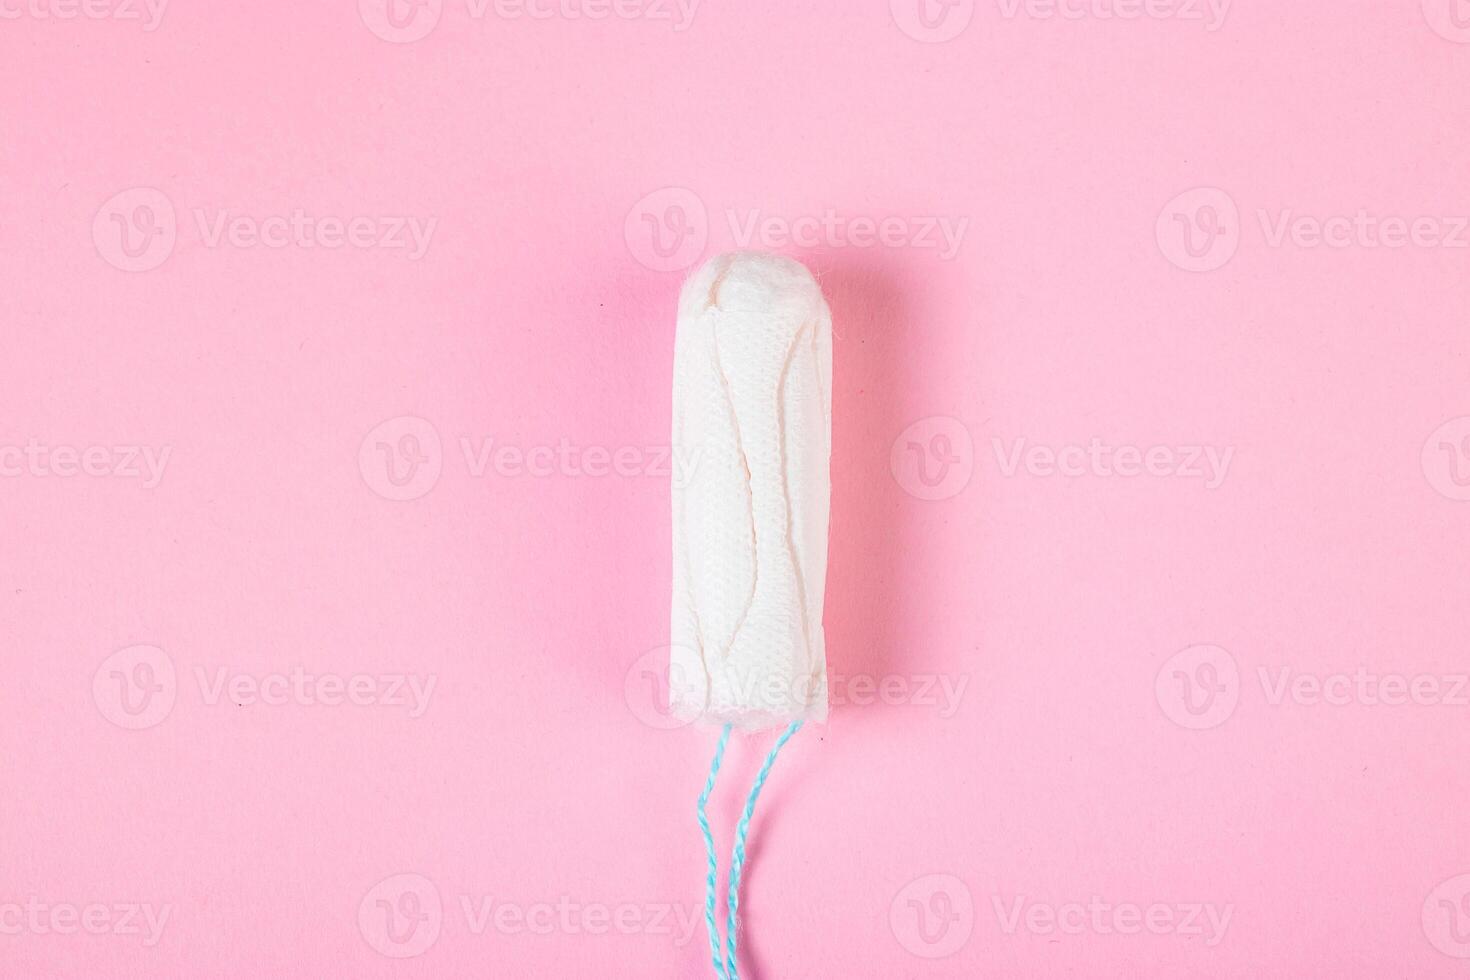 Hygienic cotton tampon on pink background. Feminine menstrual hygiene product. photo